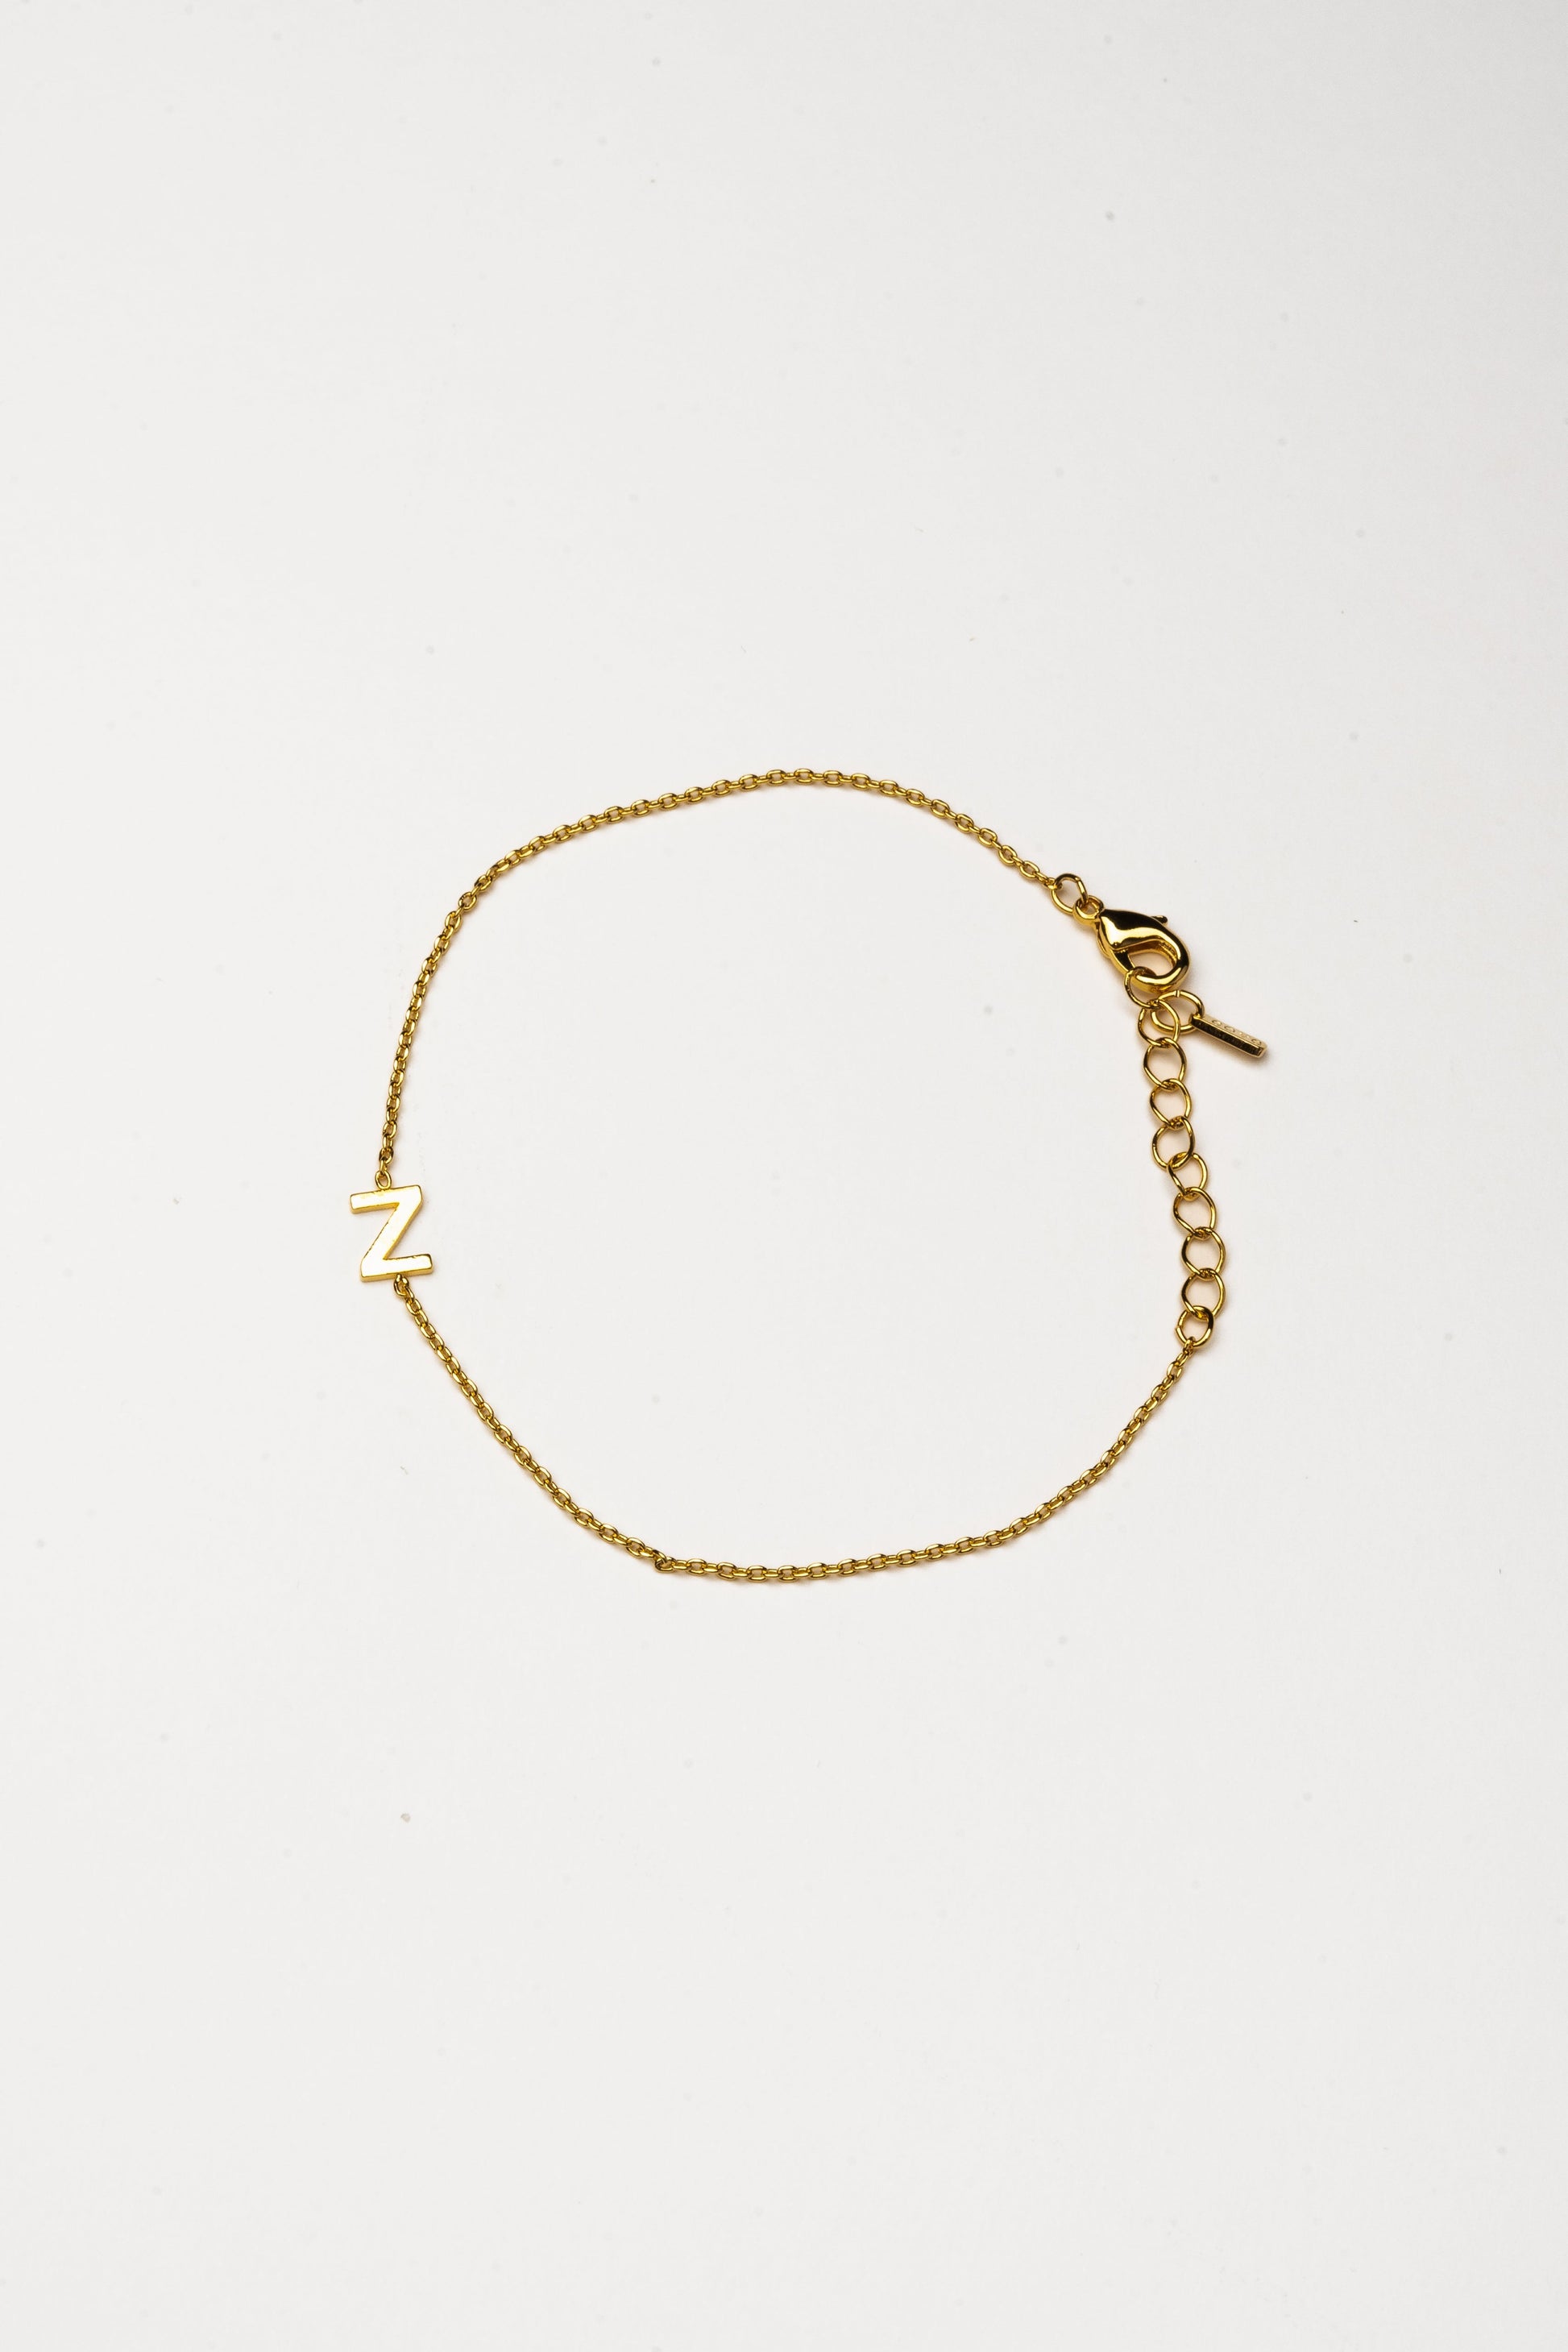 Cove Initial Bracelet WOMEN'S BRACELET Cove Accessories 18k Gold Plated 7" + 1" extender Z